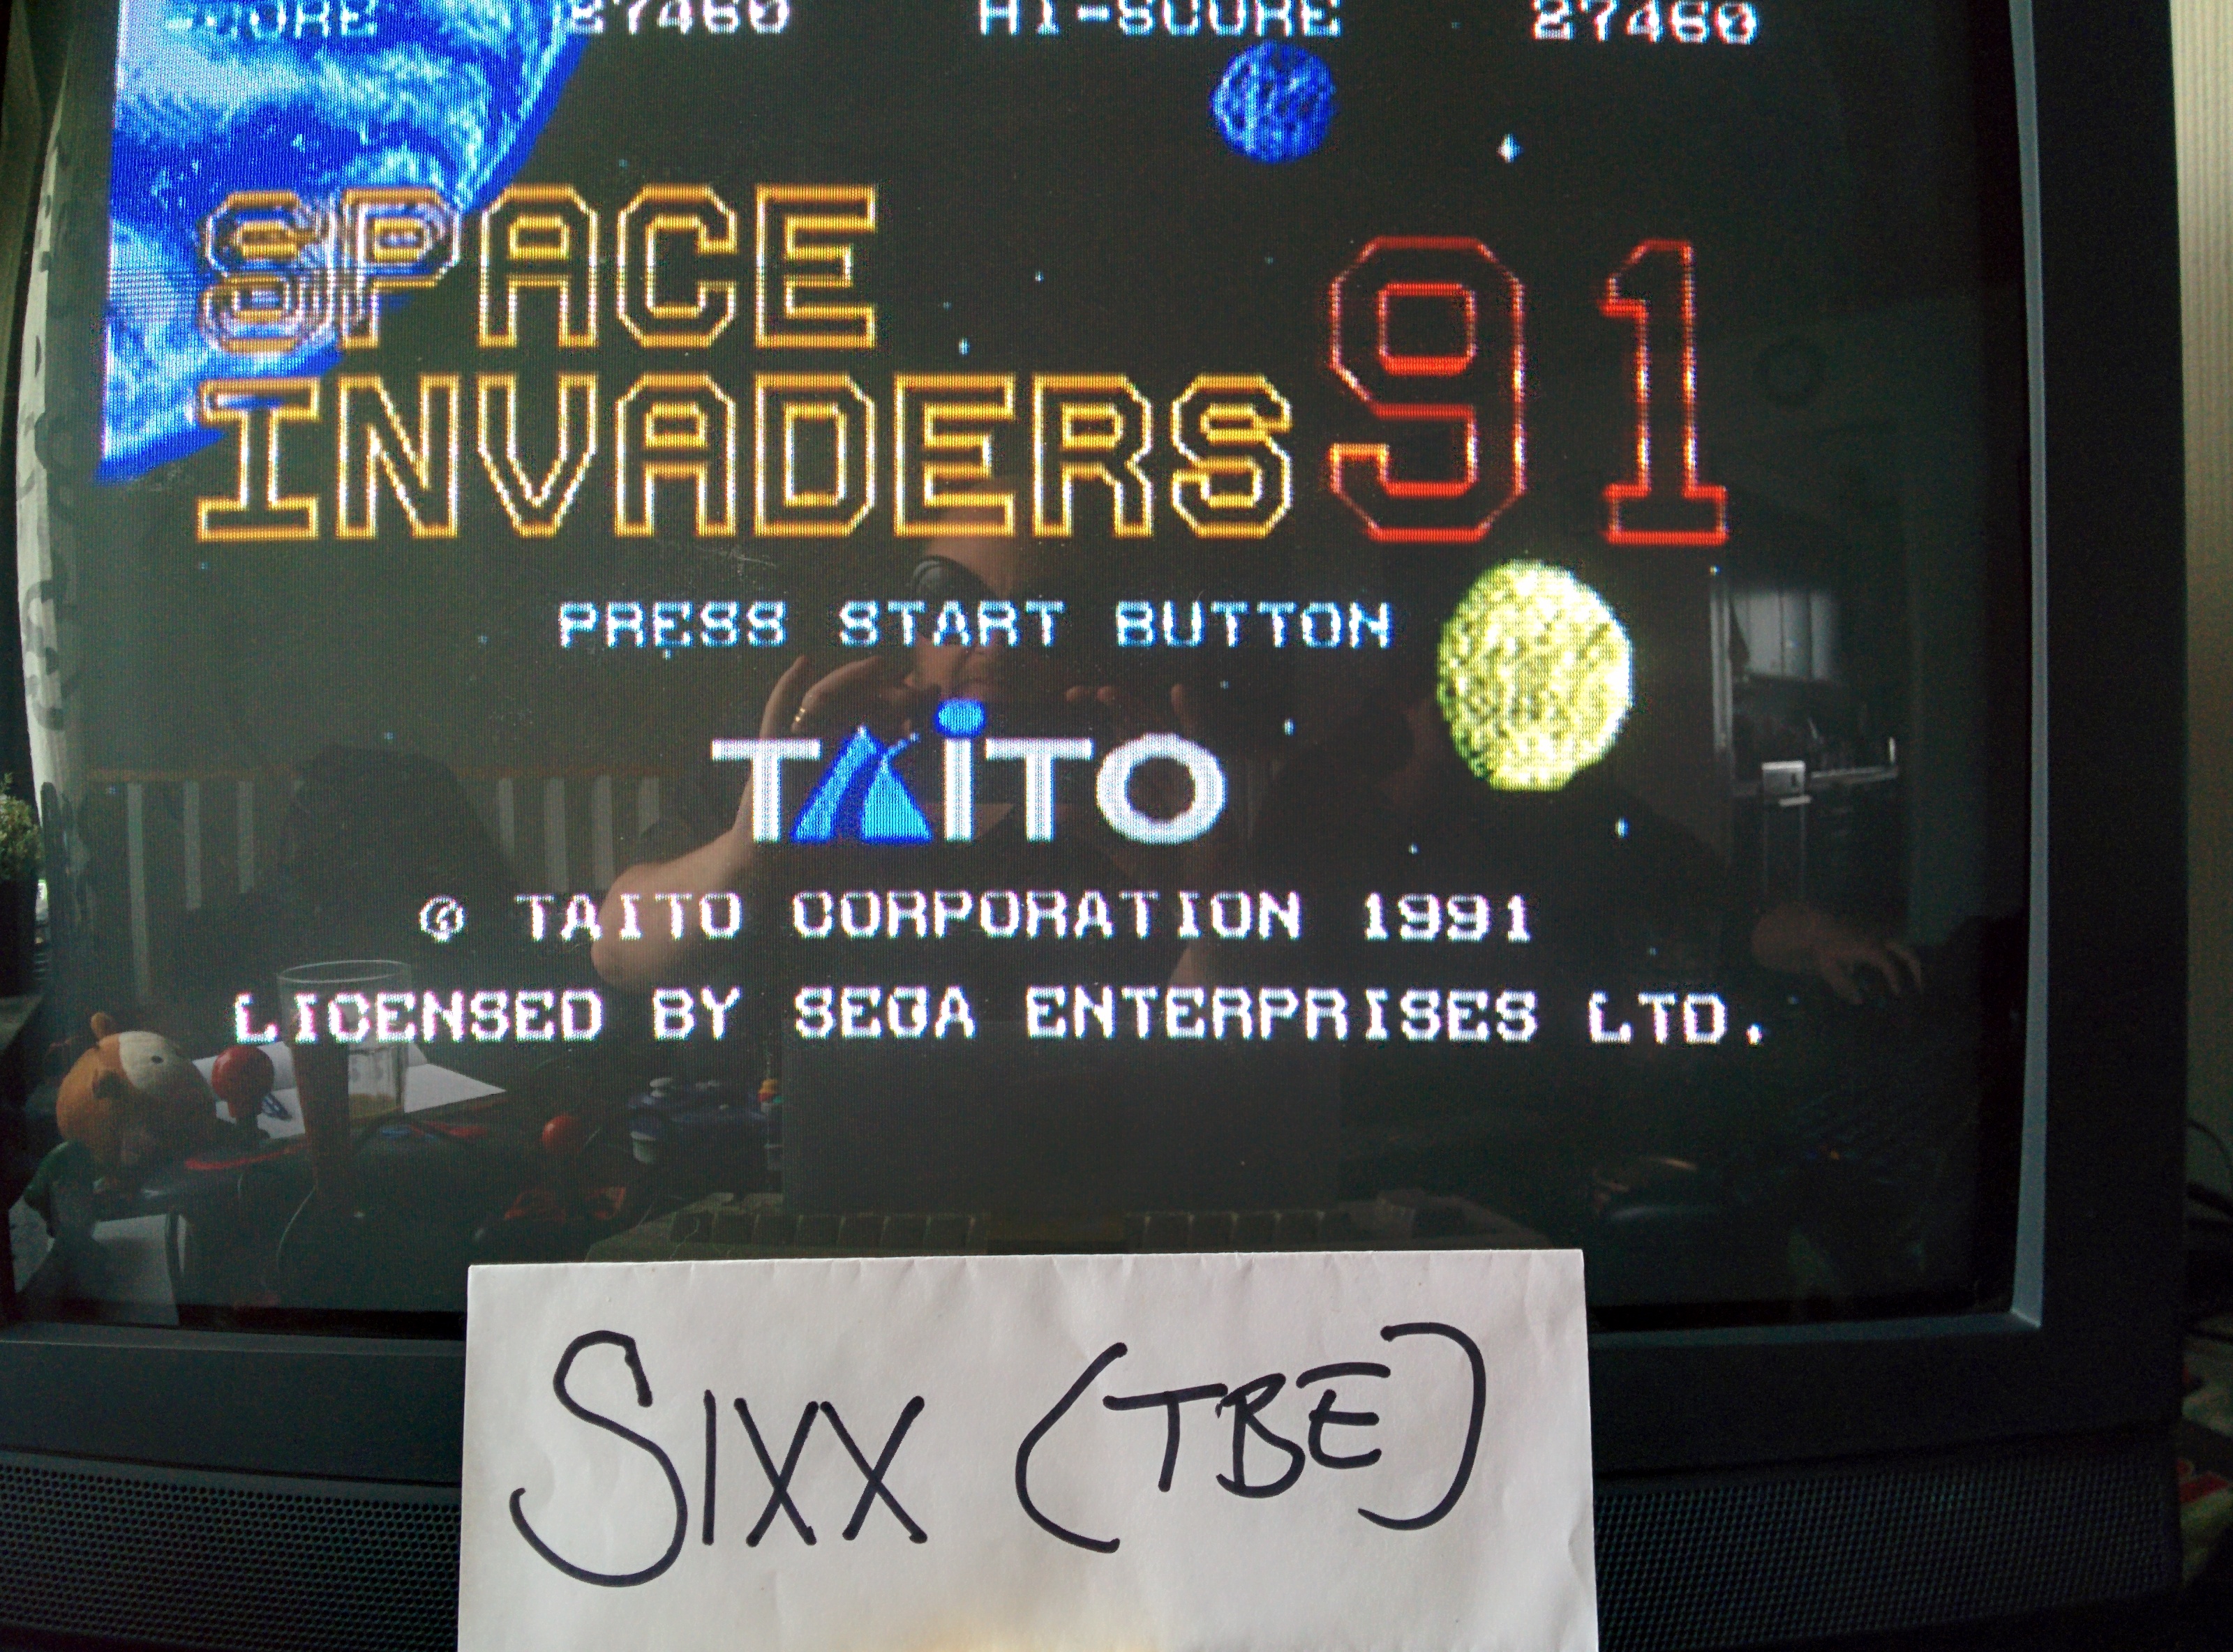 Sixx: Space Invaders 91 (Sega Genesis / MegaDrive Emulated) 27,460 points on 2014-05-07 02:05:31